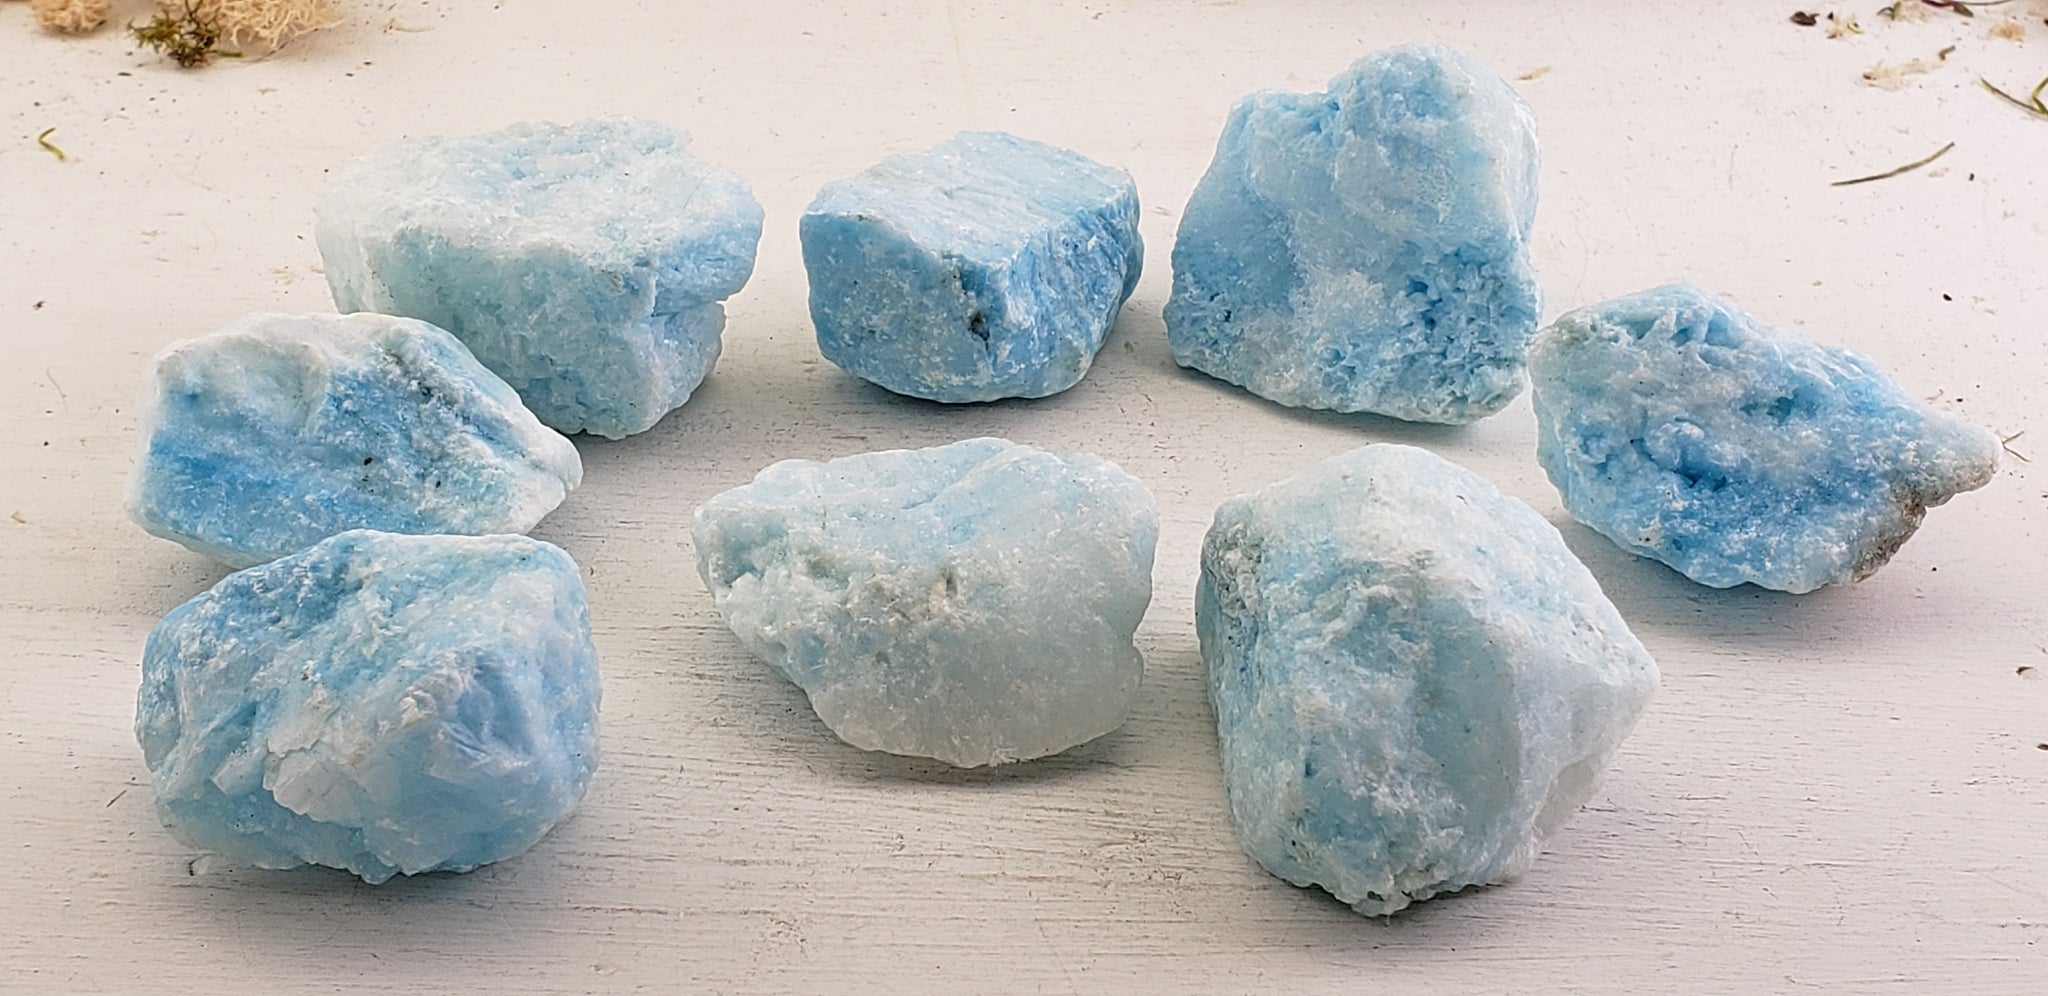 pale blue stone